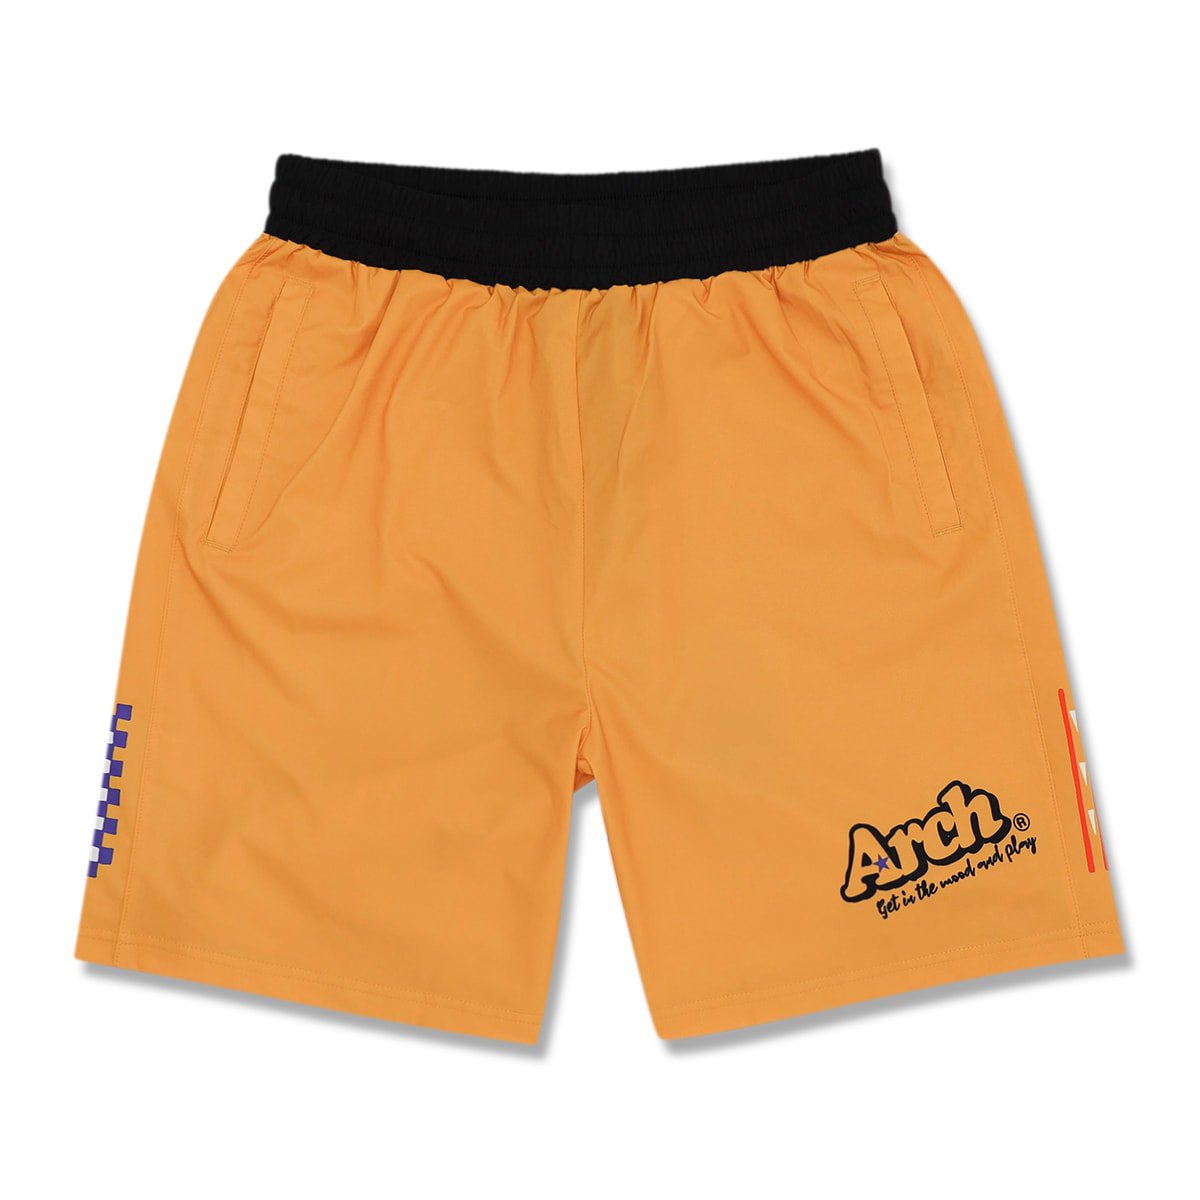 rough designed shorts【honey yellow】 - Arch ☆ アーチ 